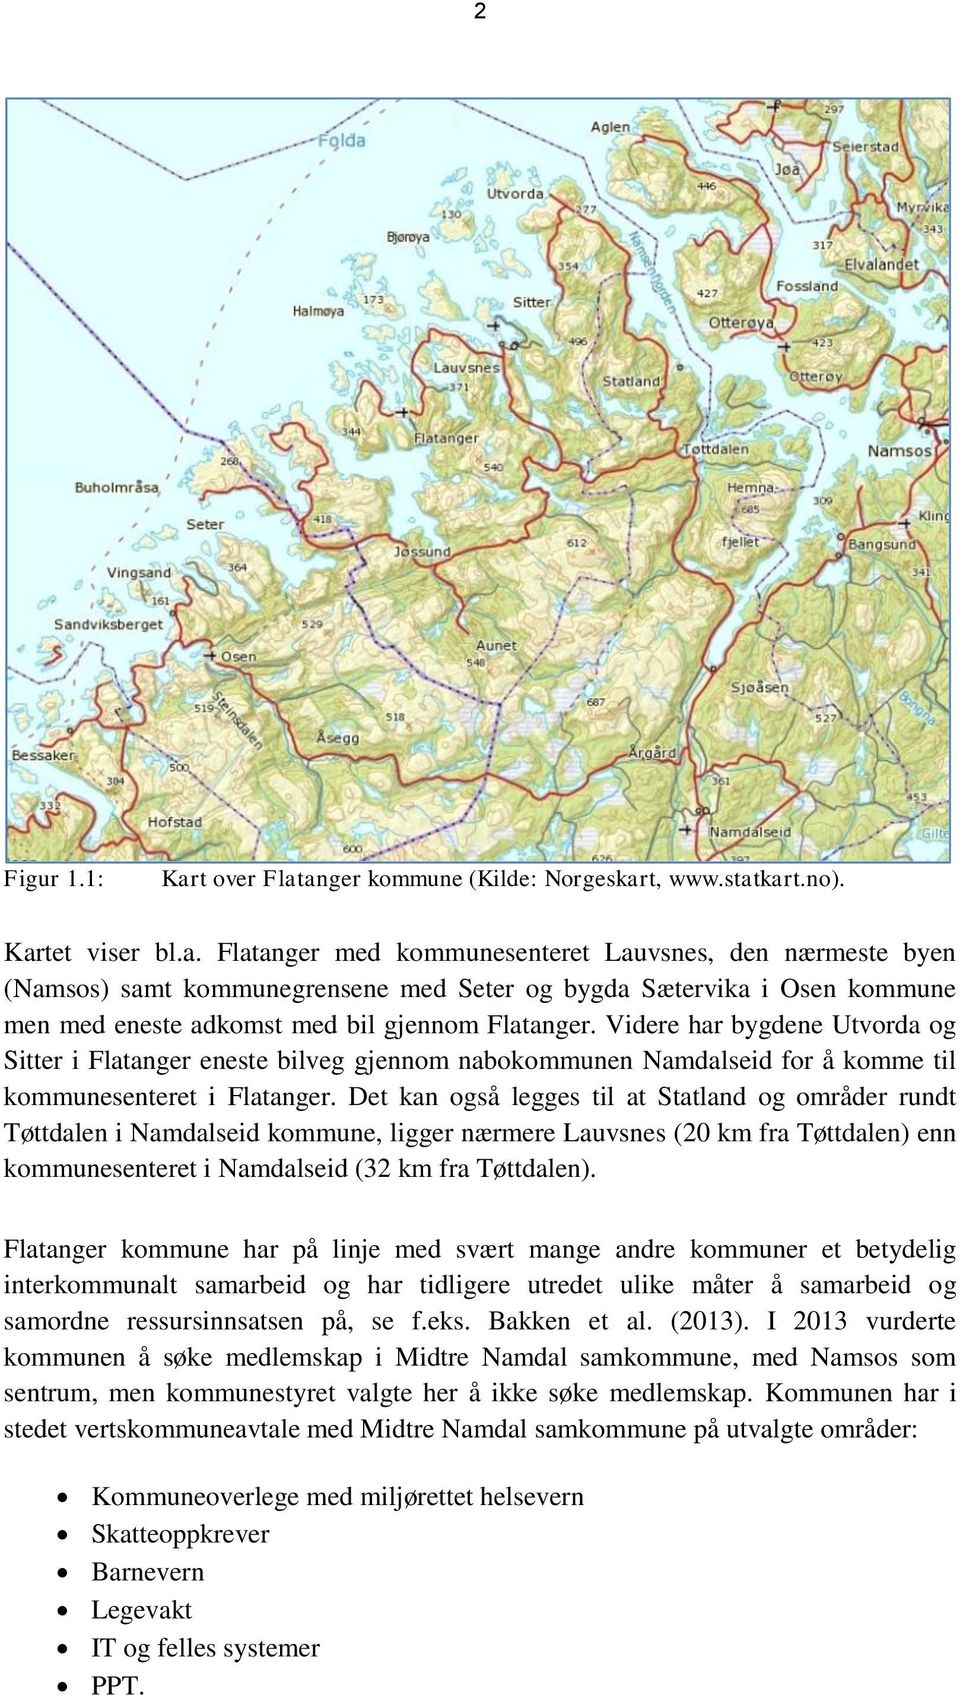 Det kan også legges til at Statland og områder rundt Tøttdalen i Namdalseid kommune, ligger nærmere Lauvsnes (20 km fra Tøttdalen) enn kommunesenteret i Namdalseid (32 km fra Tøttdalen).